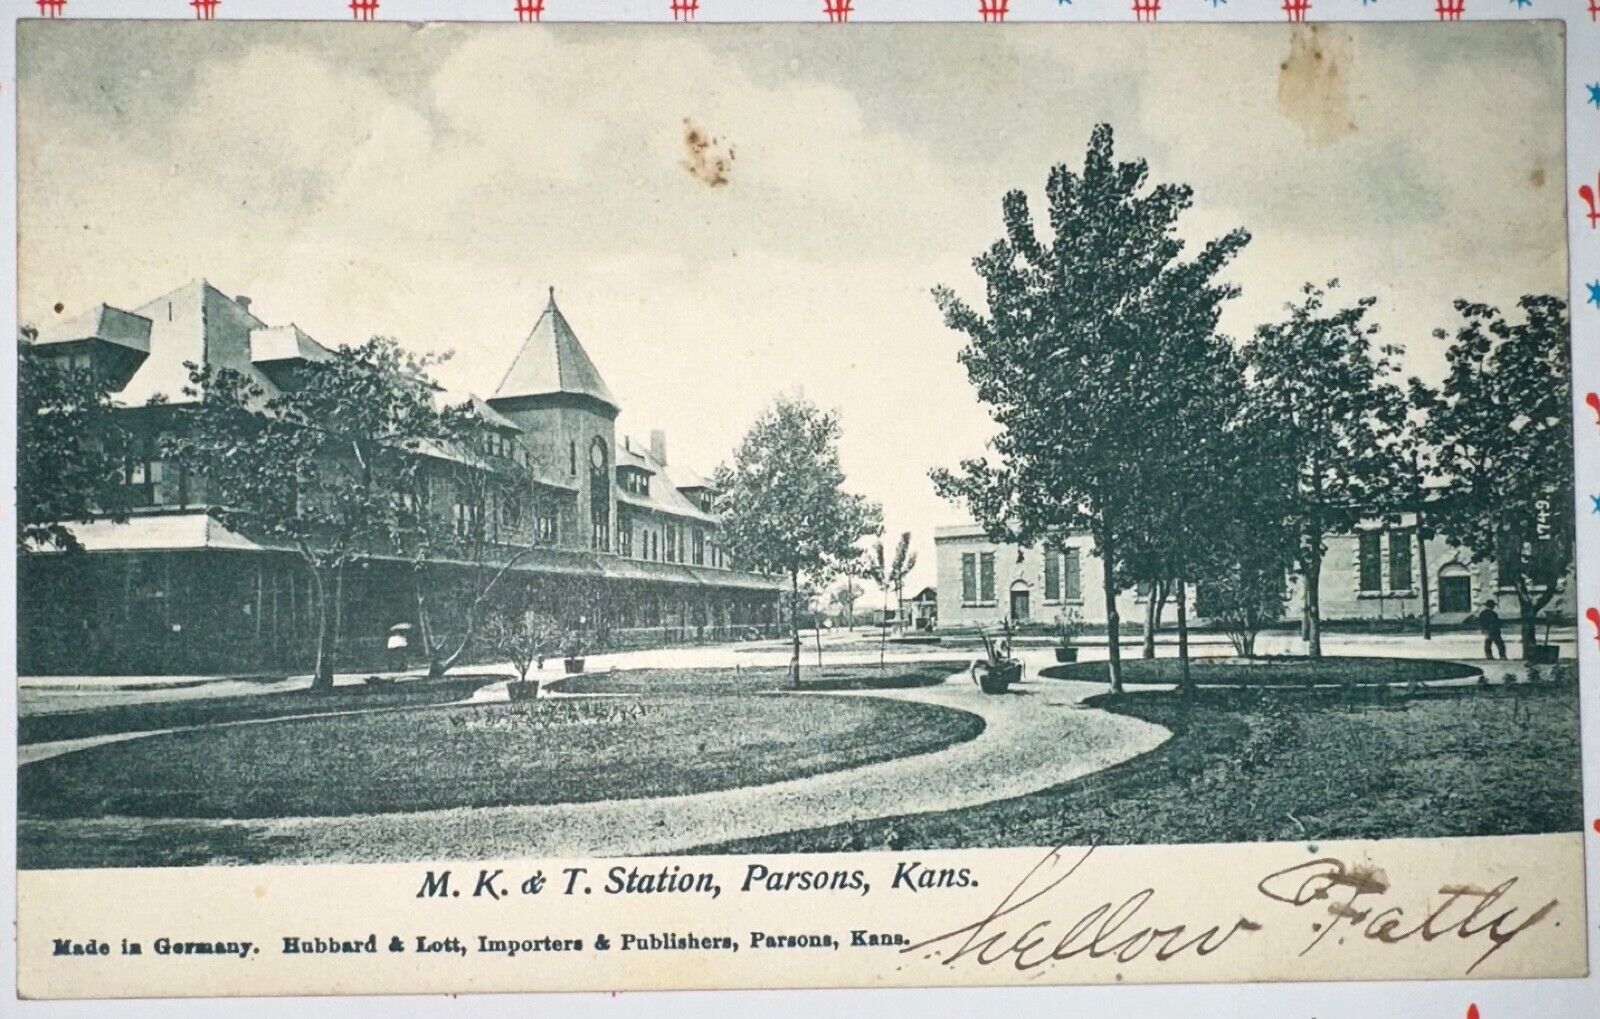 Parsons Kansas M. K. & T. Railroad Station Postcard 1900s